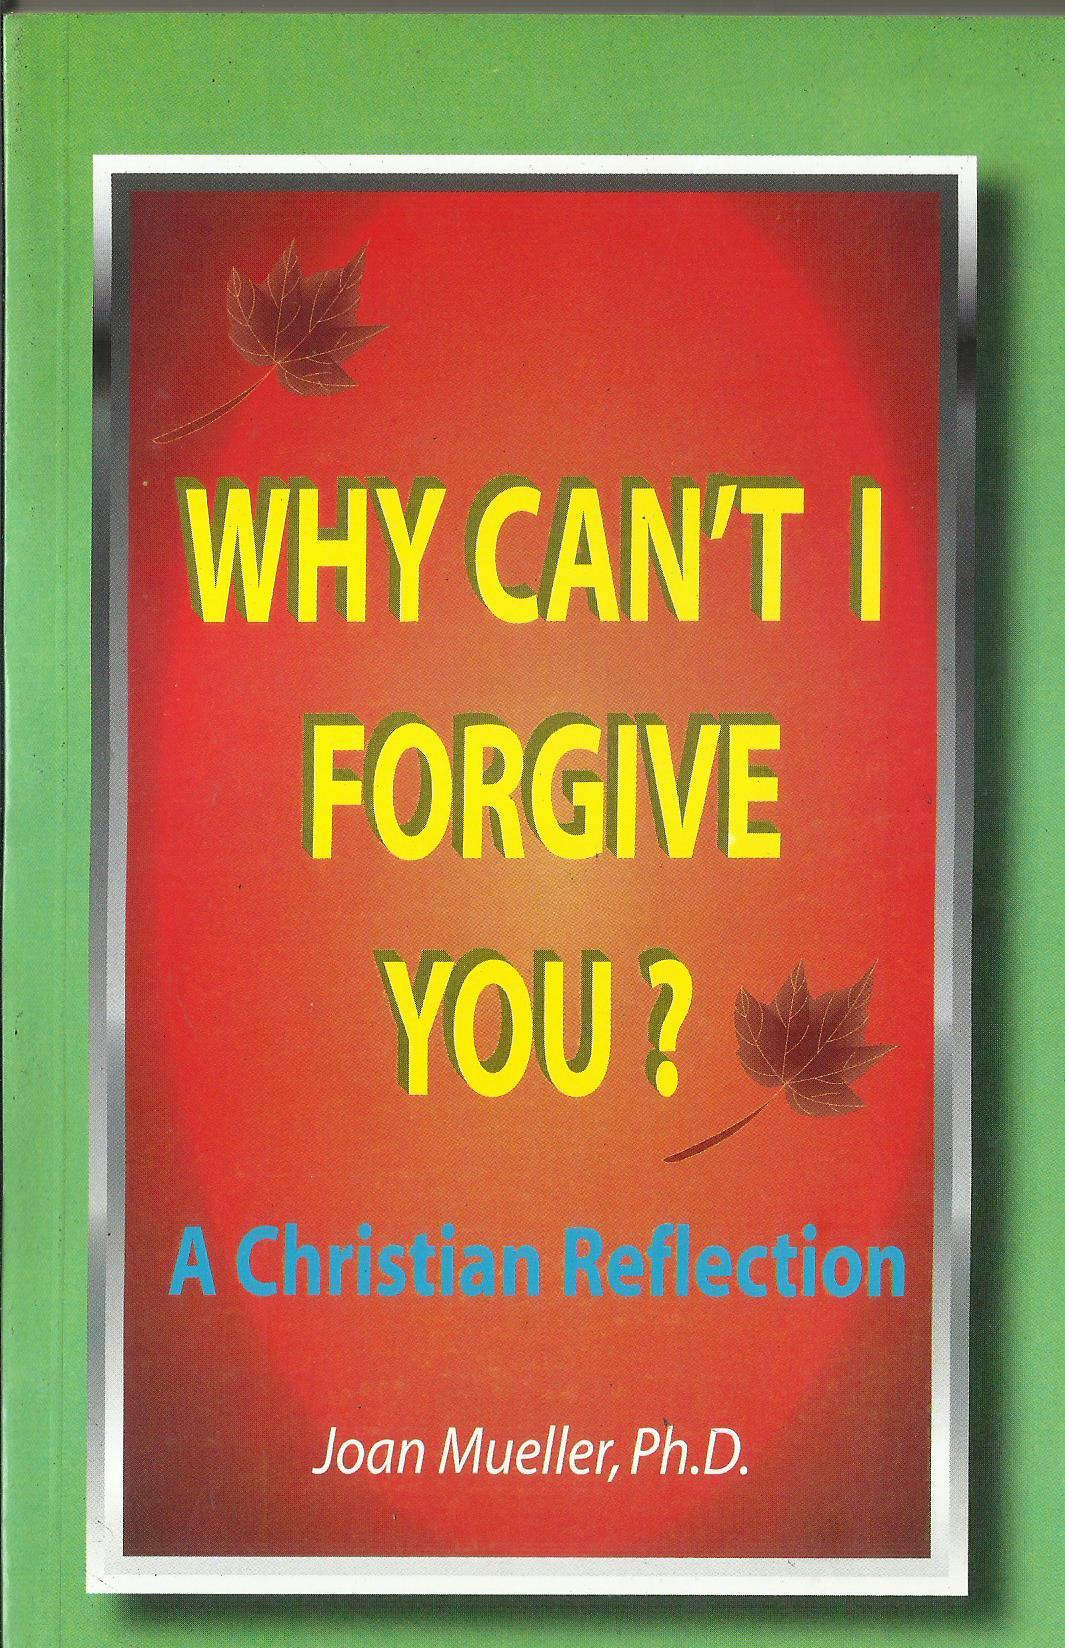 WHY CANT I FORGIVE YOU A CHRISTIAN REFLECTION - sophiabuy